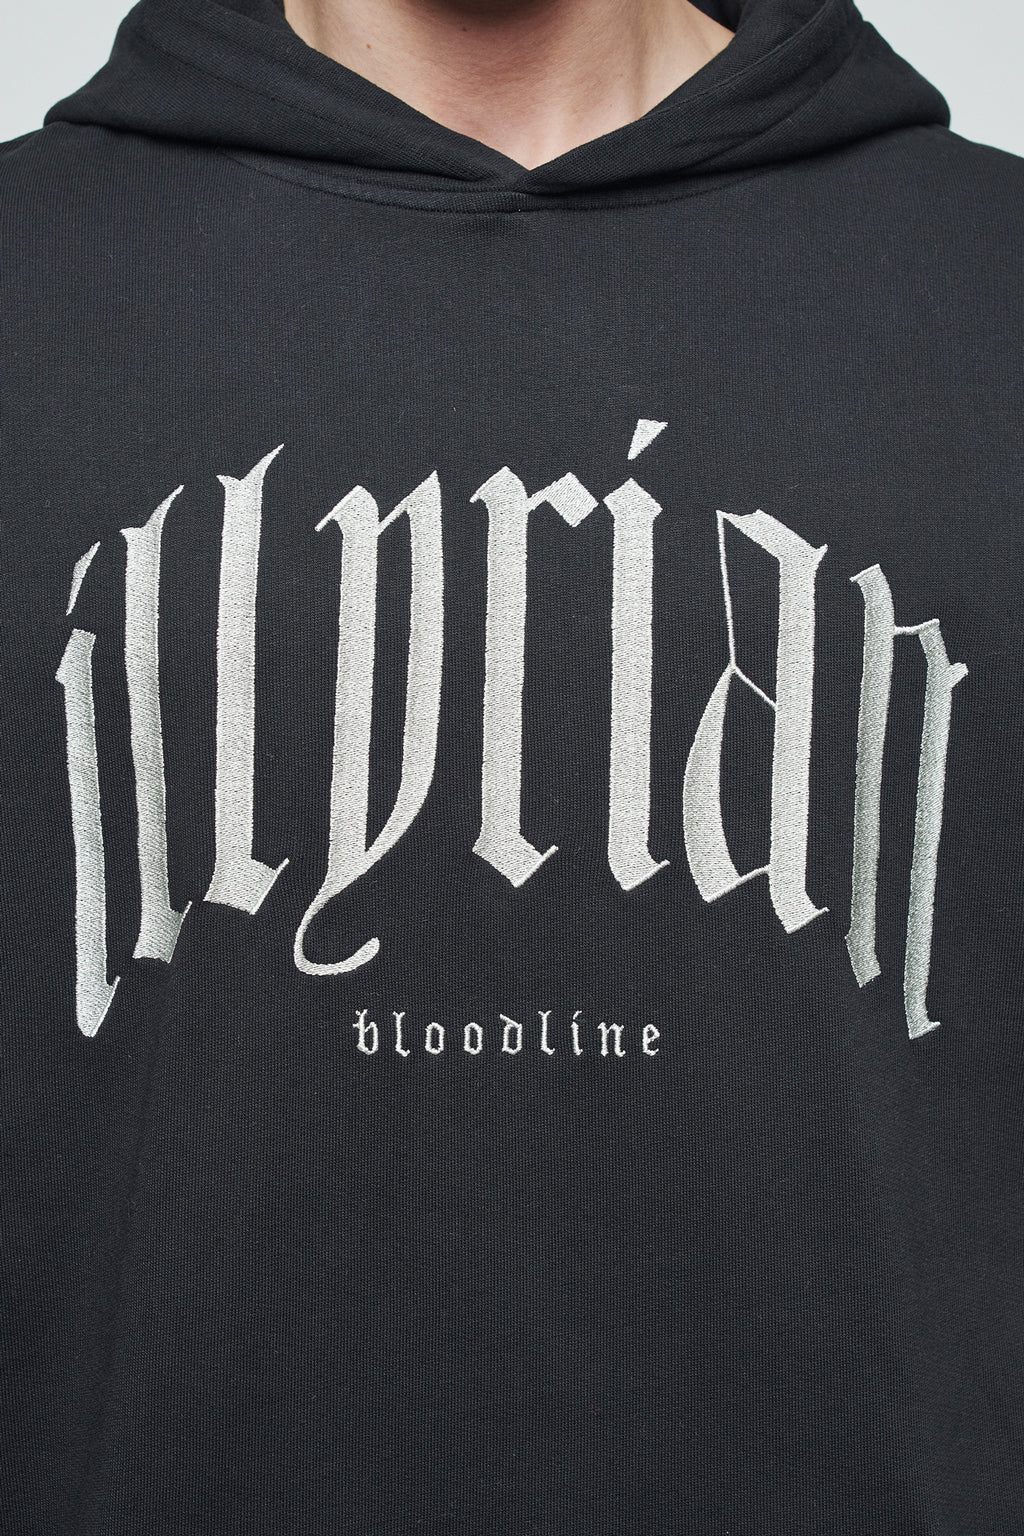 Illyrian Signature Hoodie - Washed Black – Illyrian Bloodline